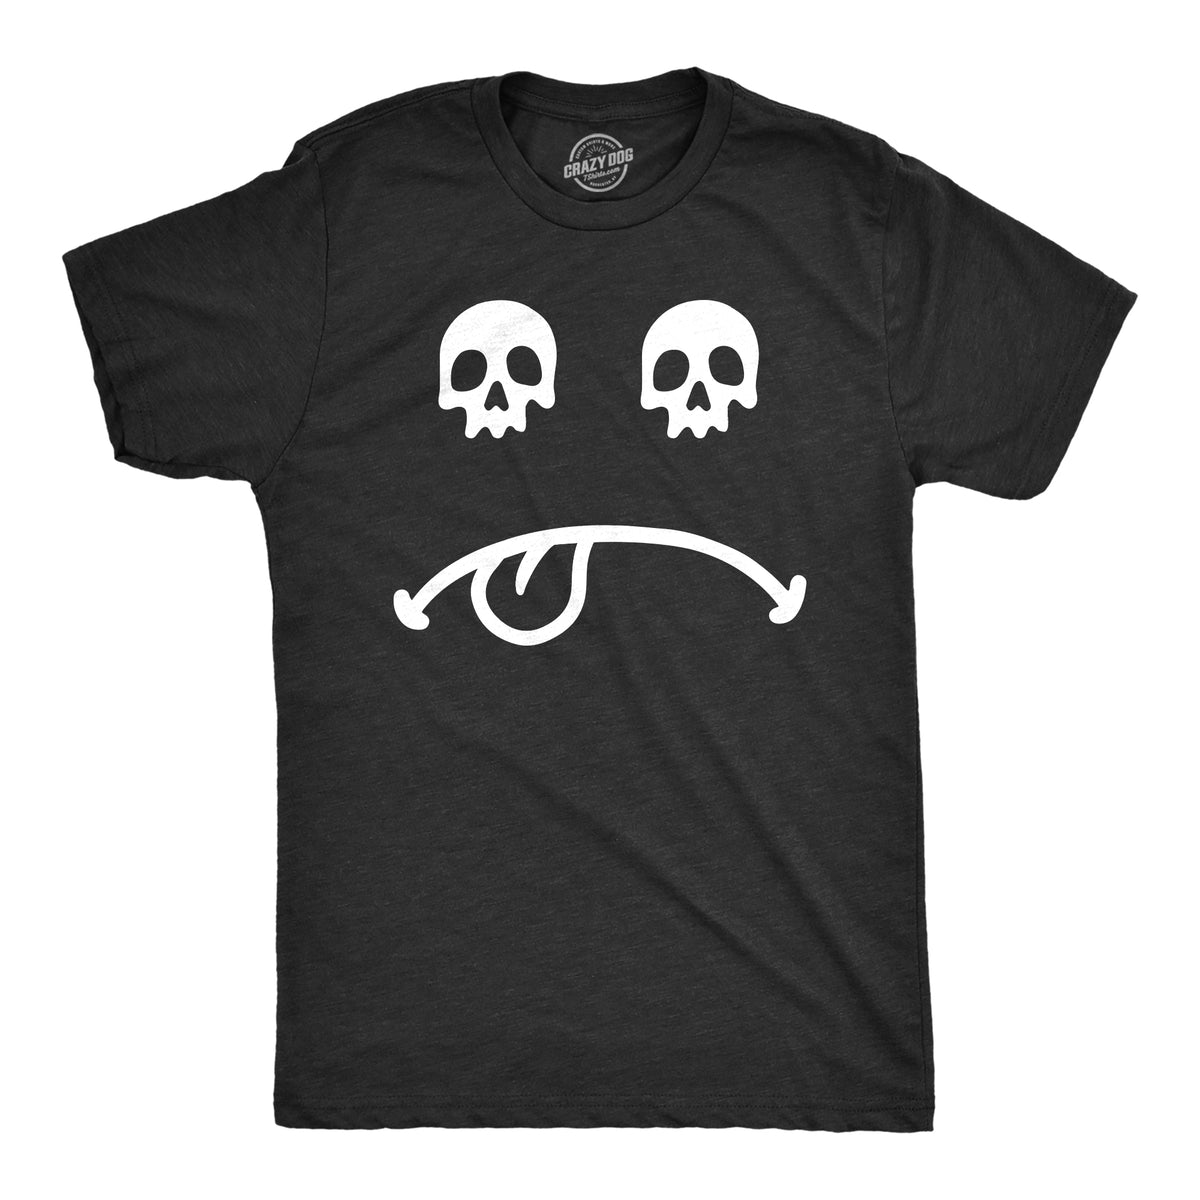 Funny Heather Black - SKULLEYES Skull Eyes Smile Mens T Shirt Nerdy sarcastic Tee